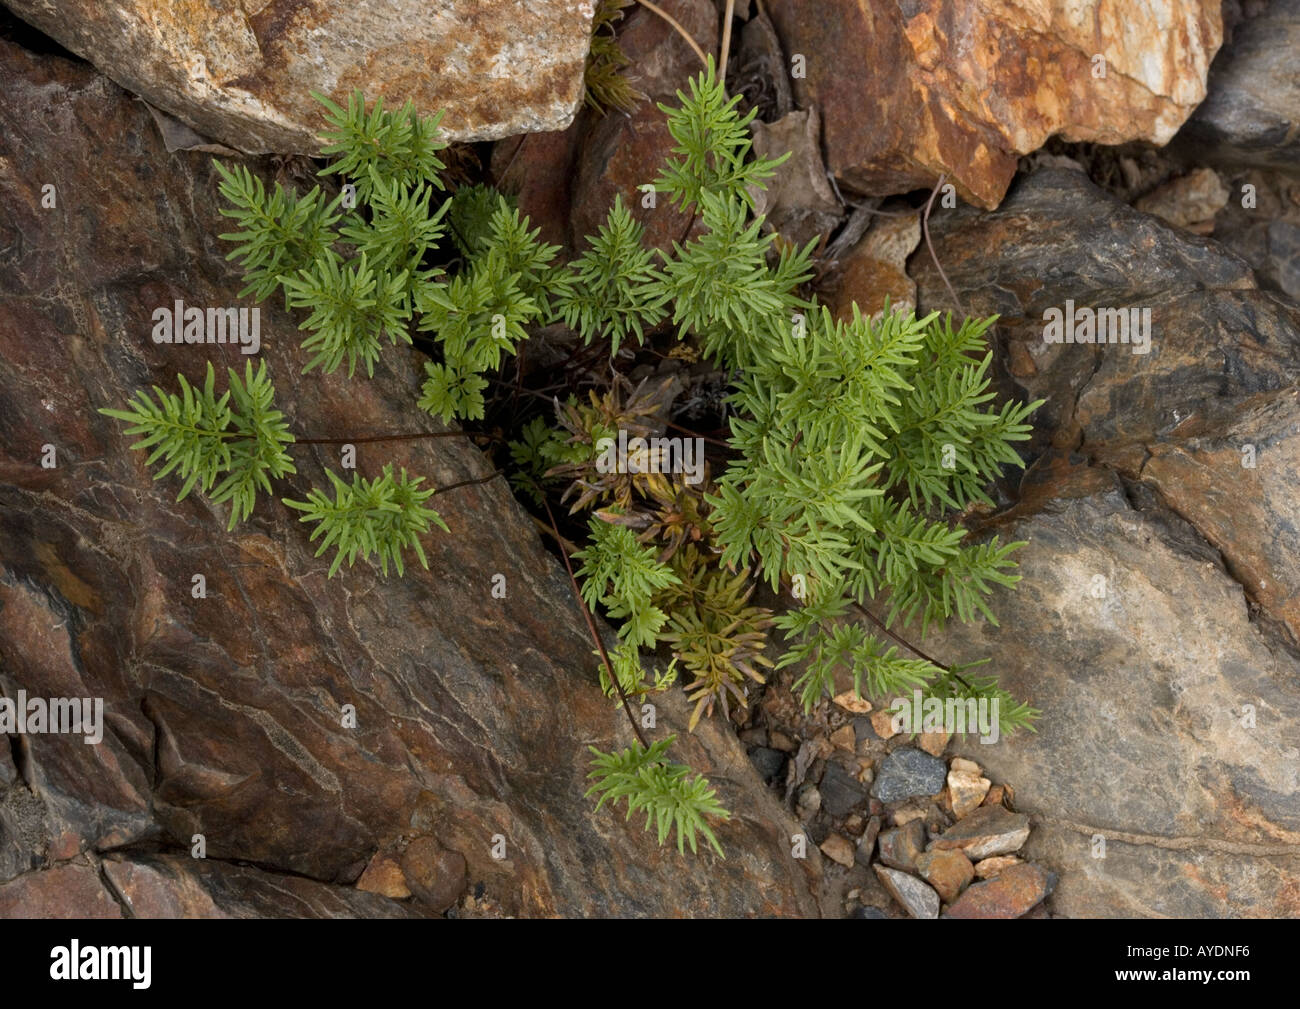 Indian's dream fern (Aspidotis densa)  in rock crevice Stock Photo